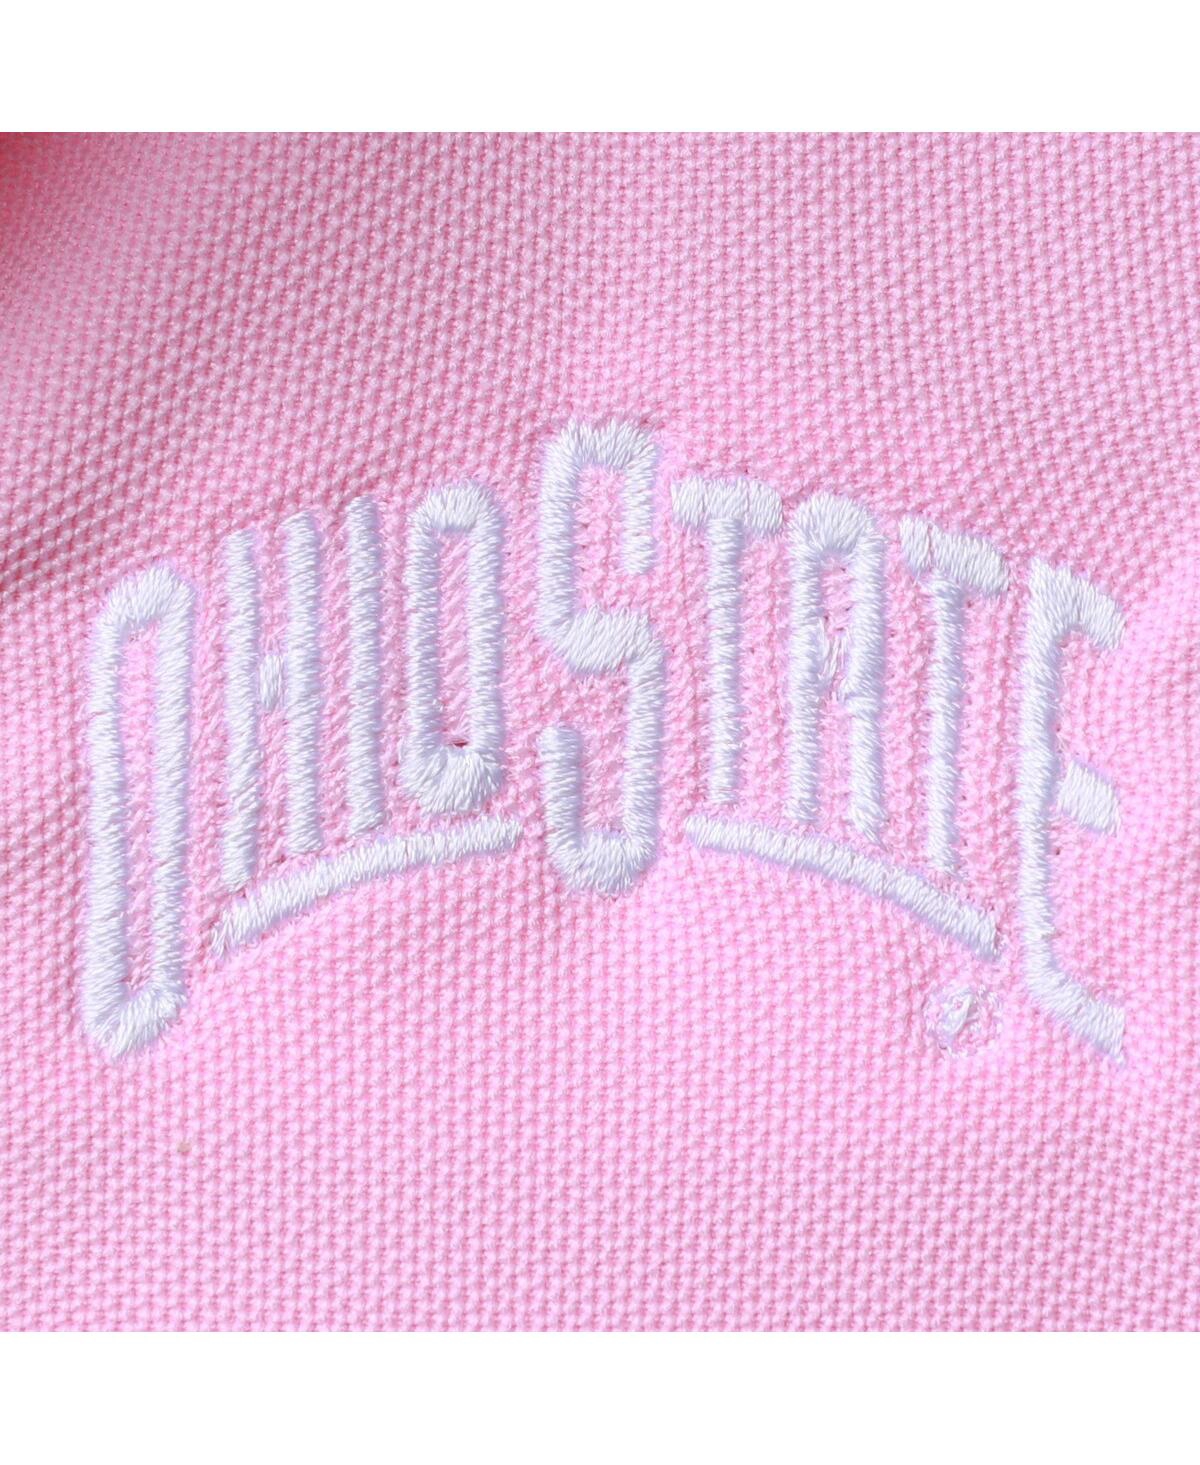 Shop Garb Girls Infant  Pink Ohio State Buckeyes Caroline Cap Sleeve Polo Shirt Bodysuit